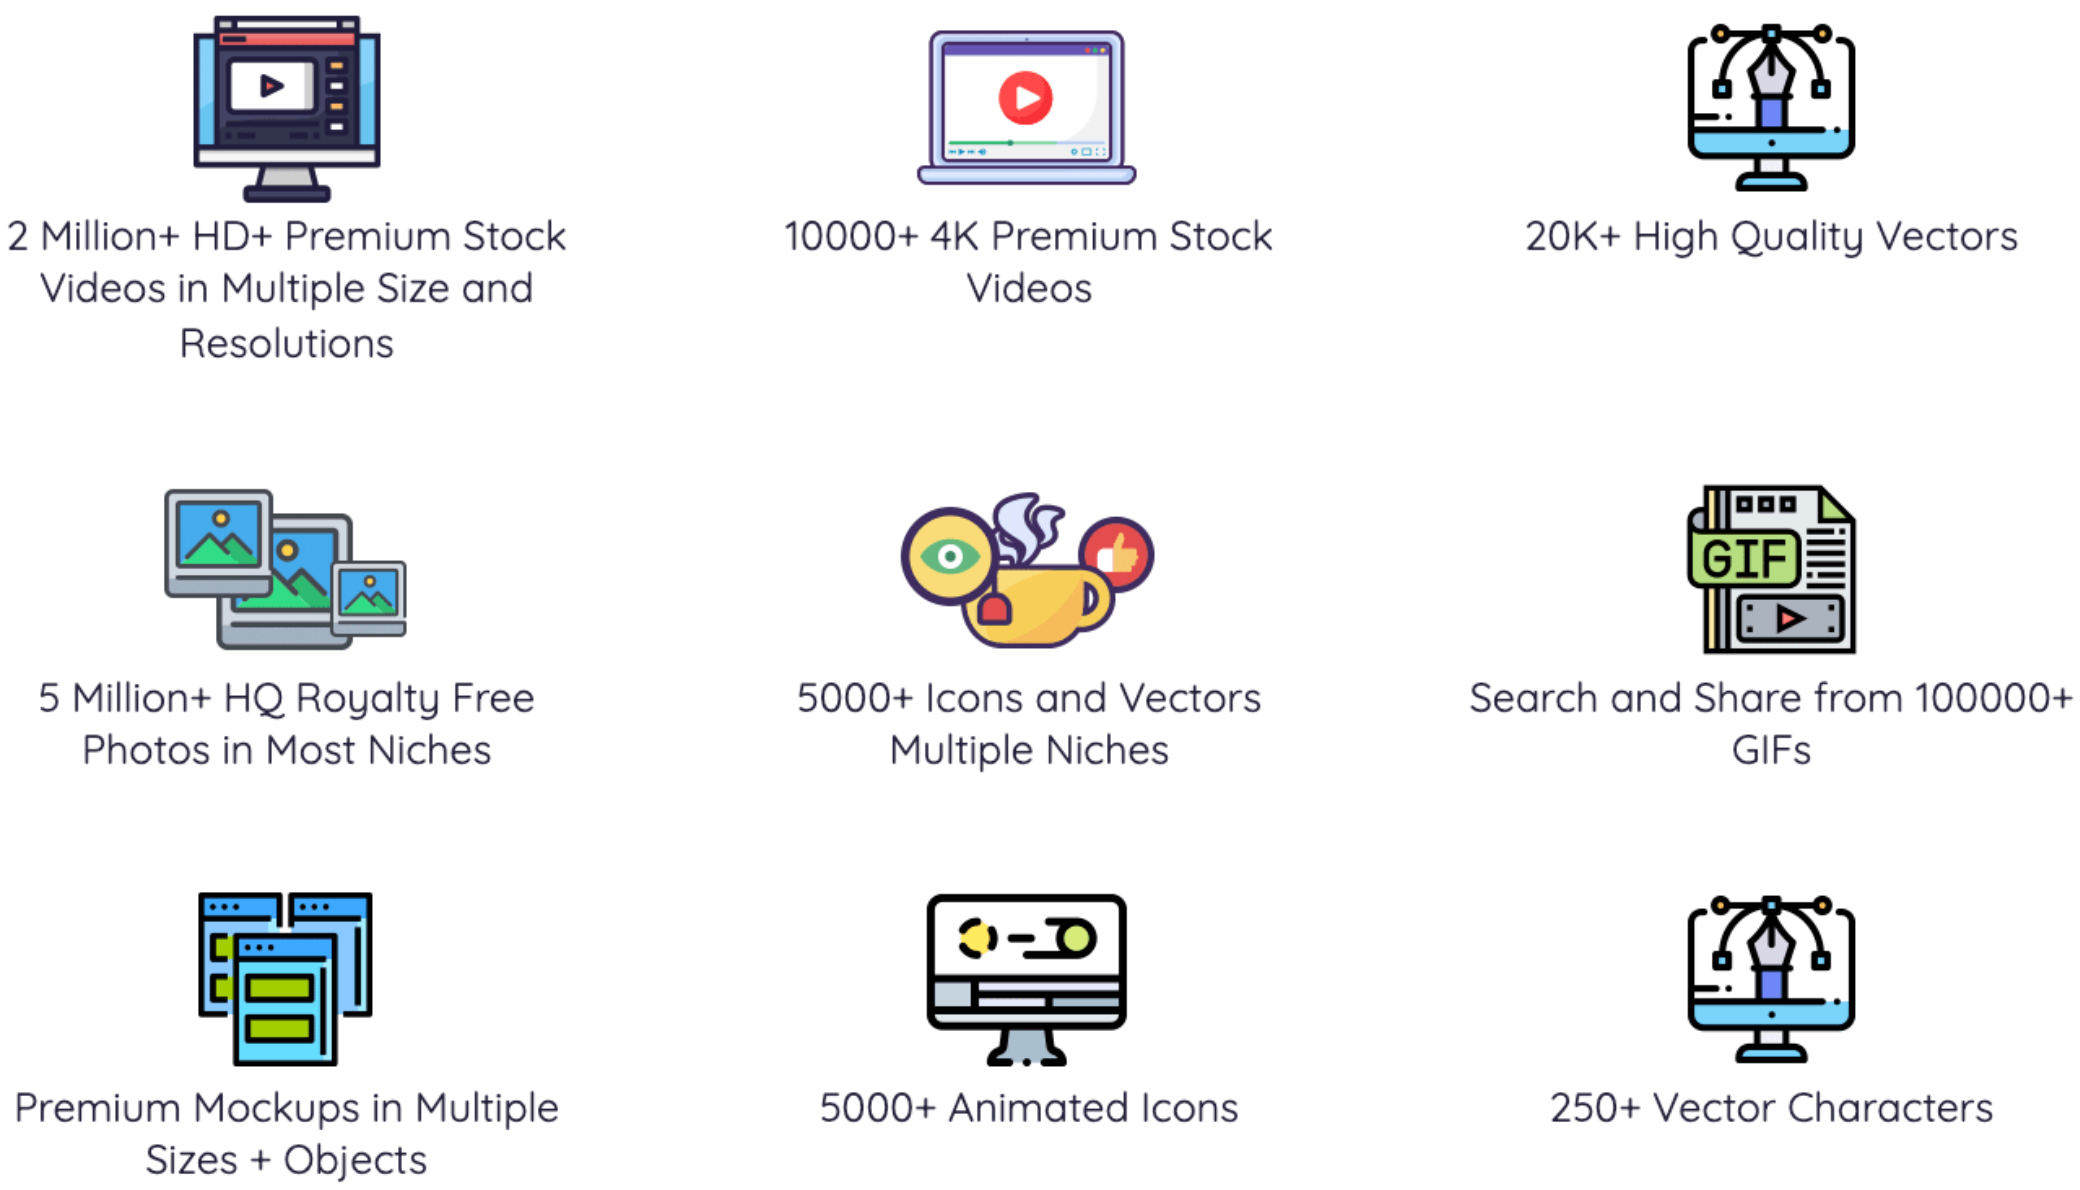 PrimeStocks Ultra Review – Millions of Stock Media Assets